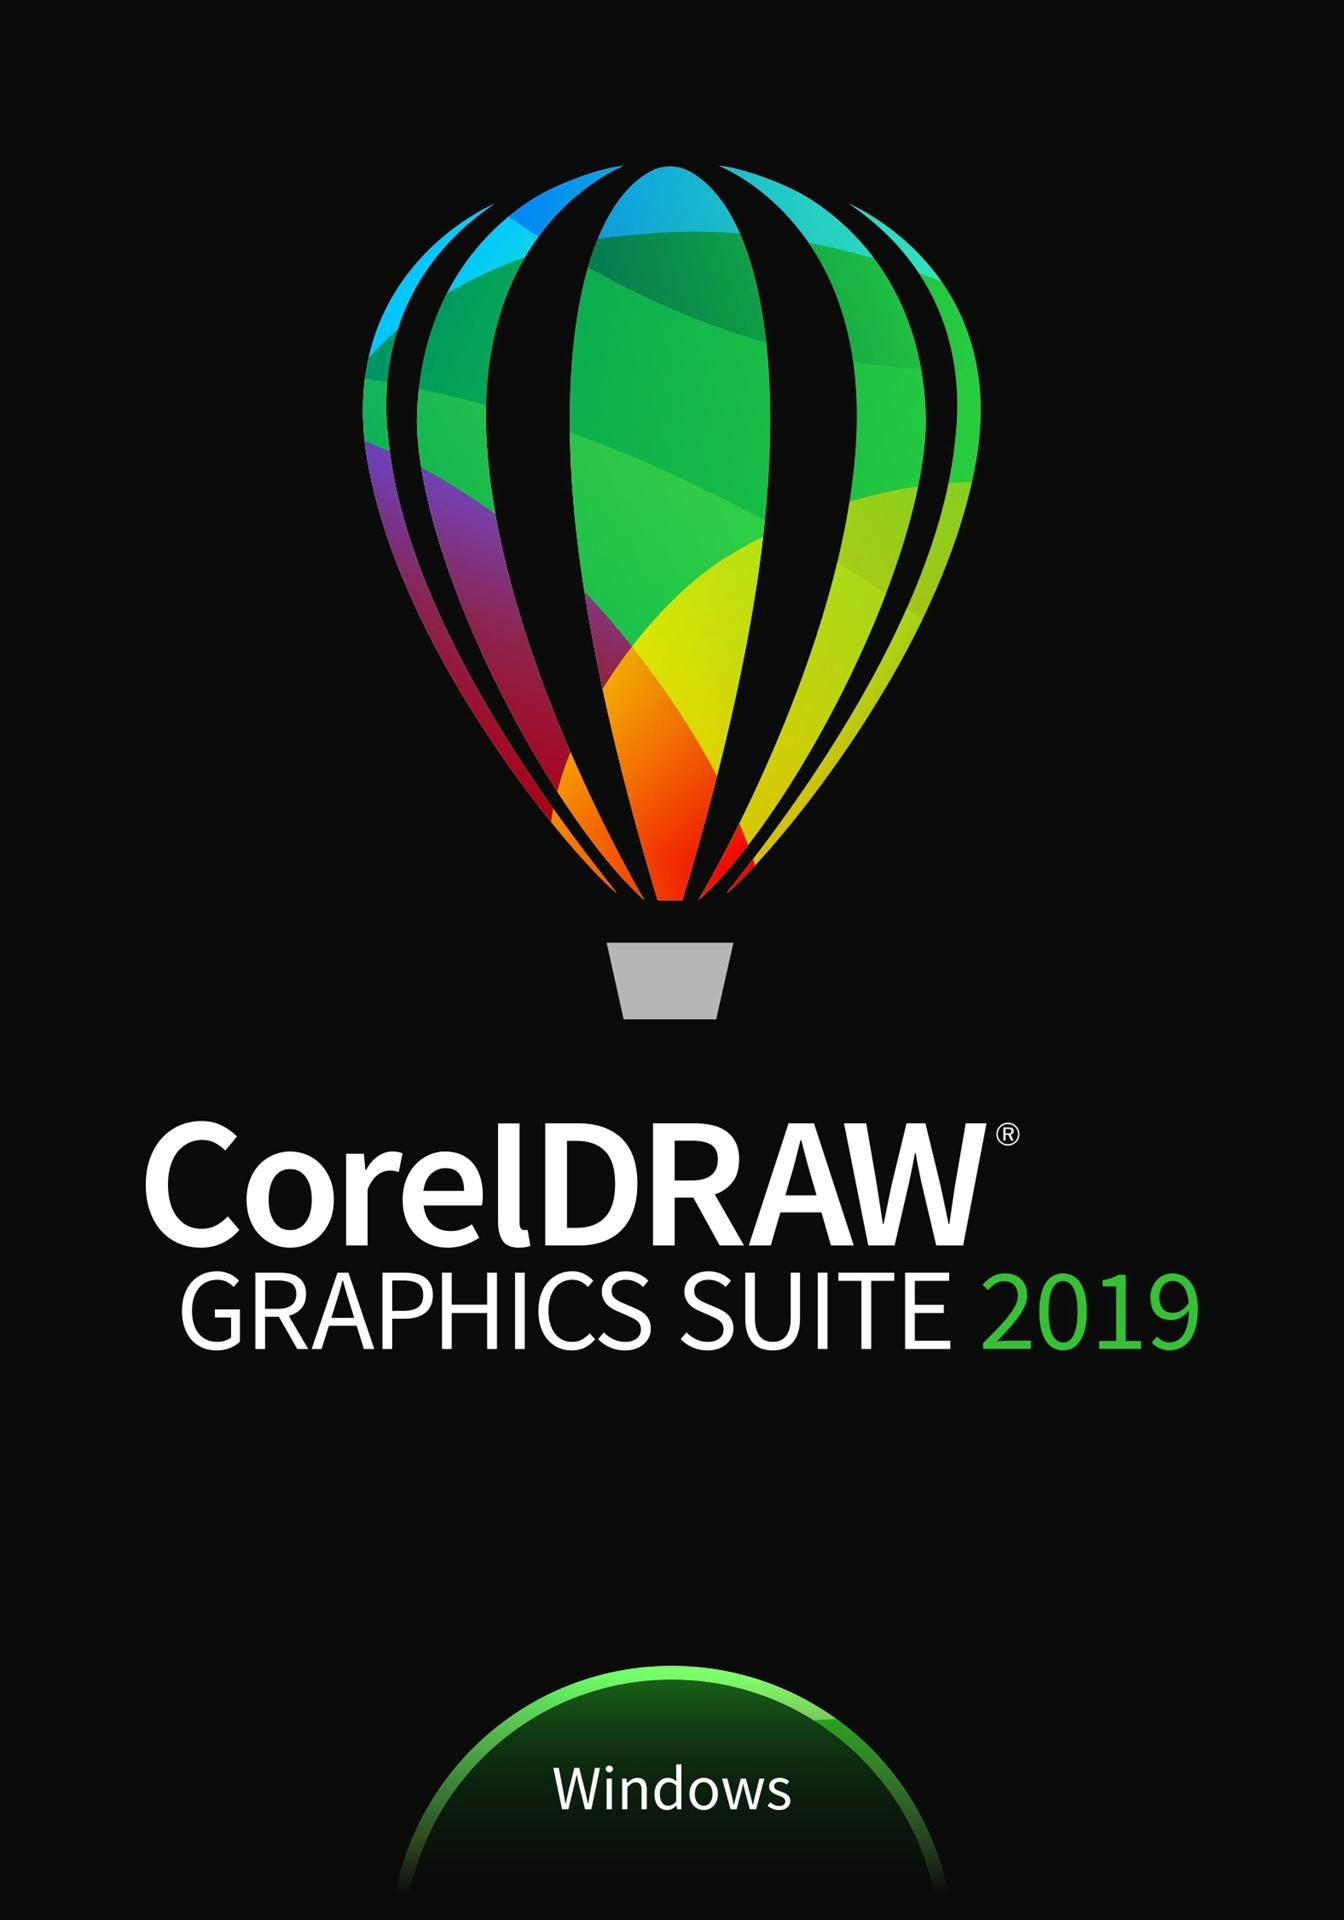 coreldraw graphics suite 2020 education edition